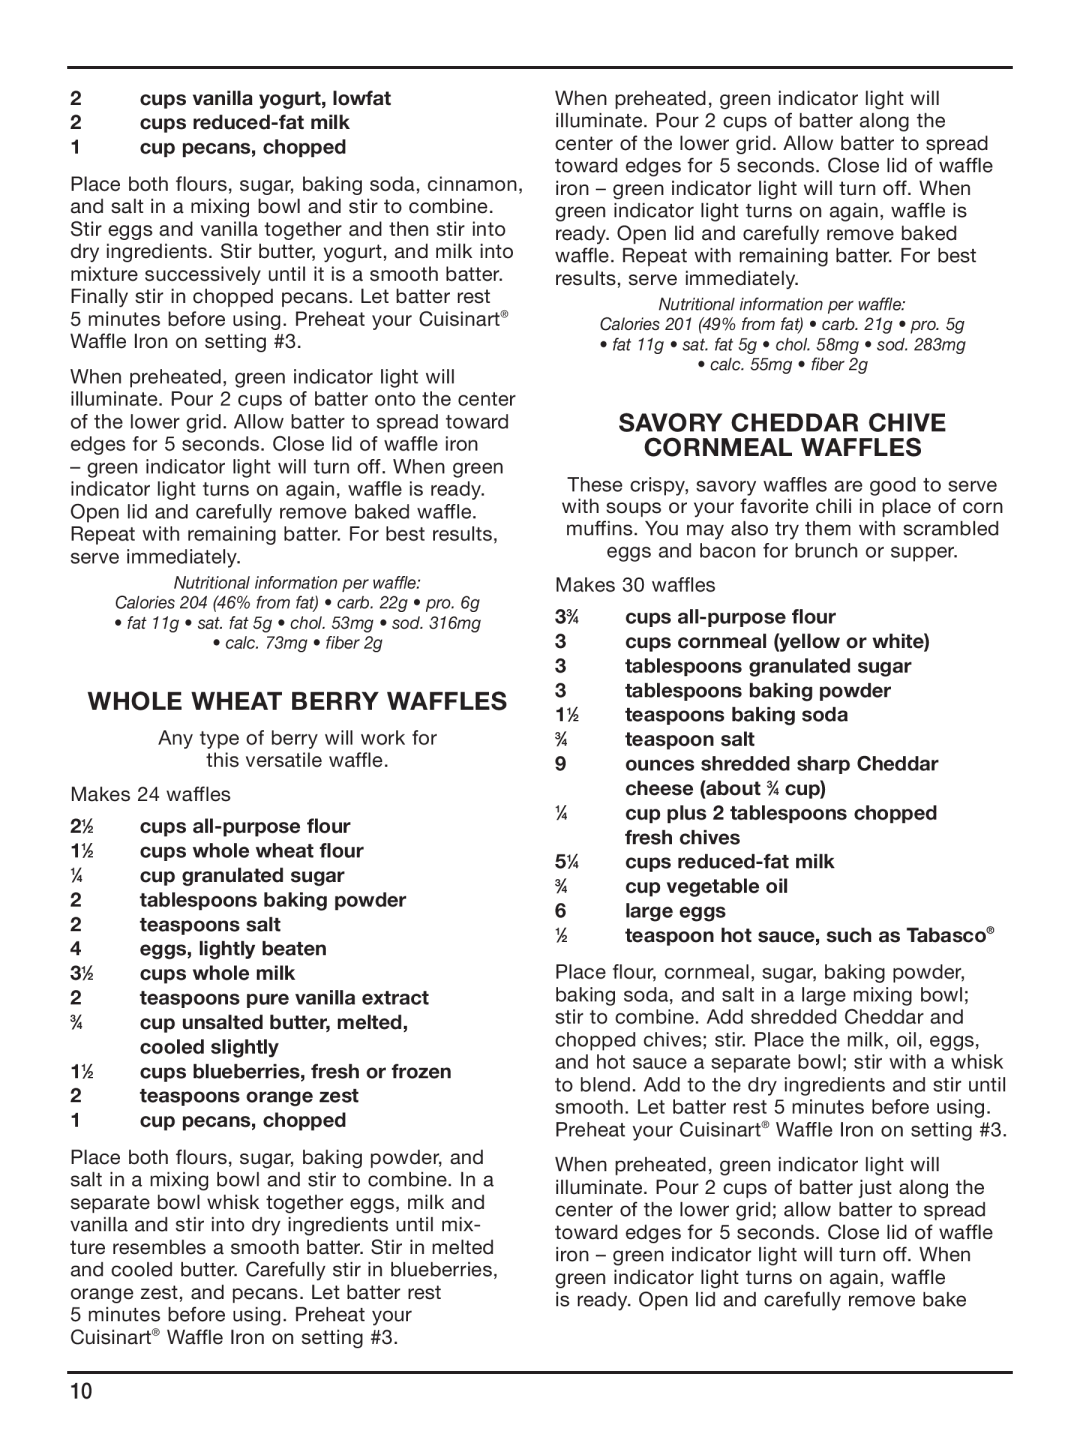 Cuisinart WAF-6 manual Whole Wheat Berry Waffles, Savory Cheddar Chive Cornmeal Waffles 